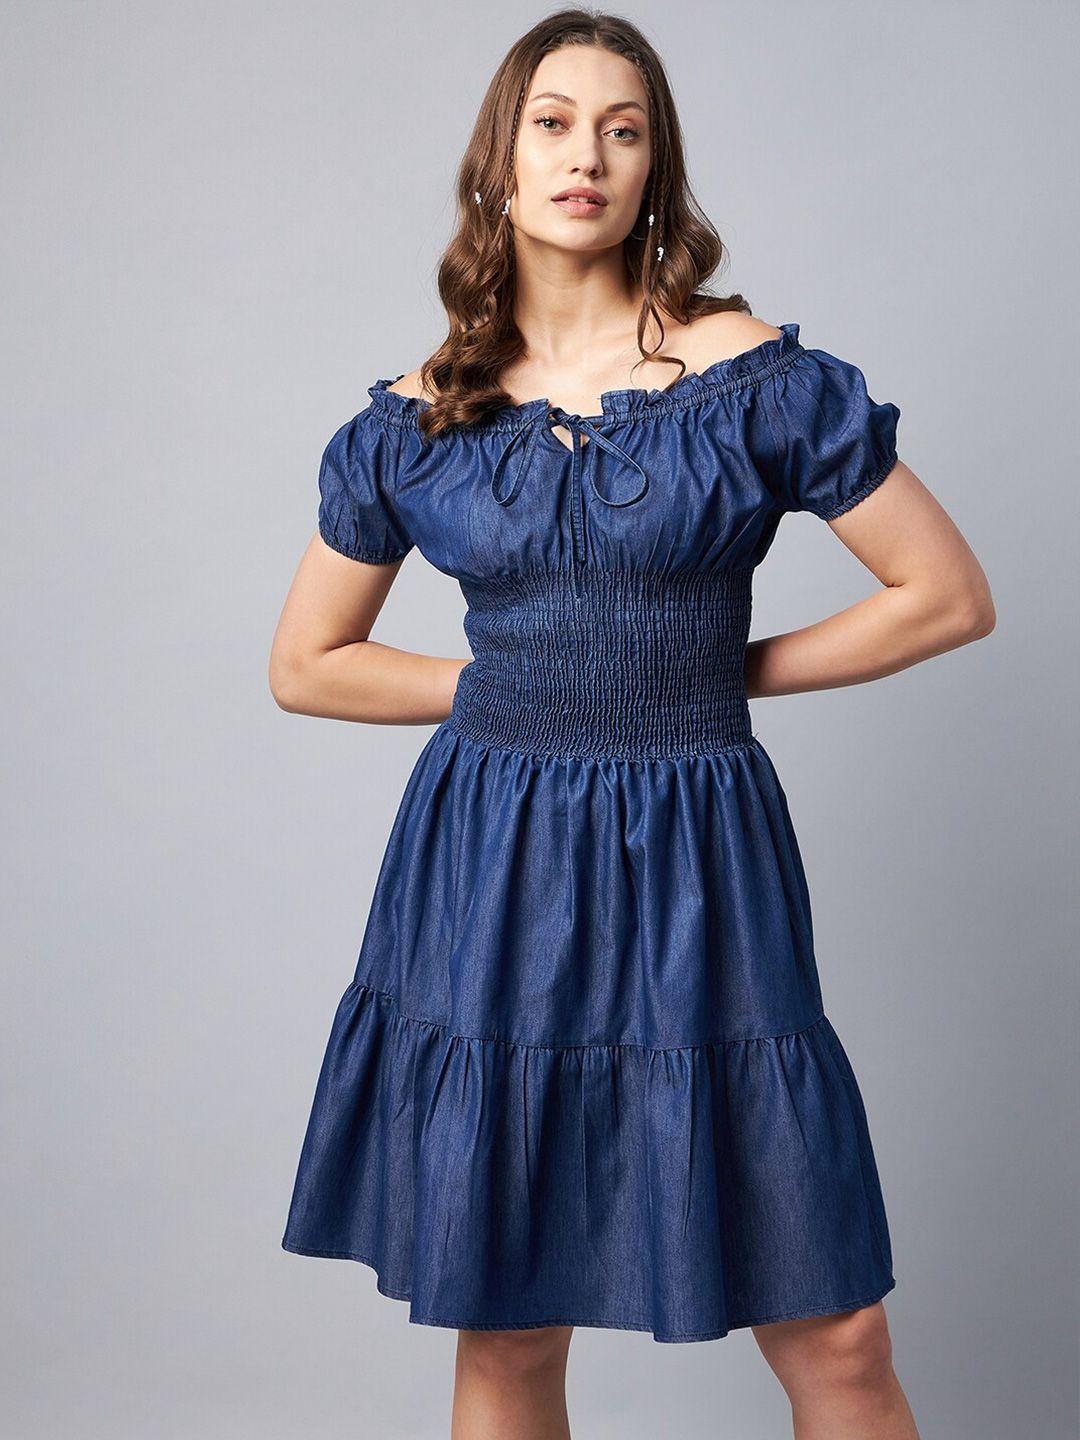 stylestone blue off-shoulder smocked denim dress